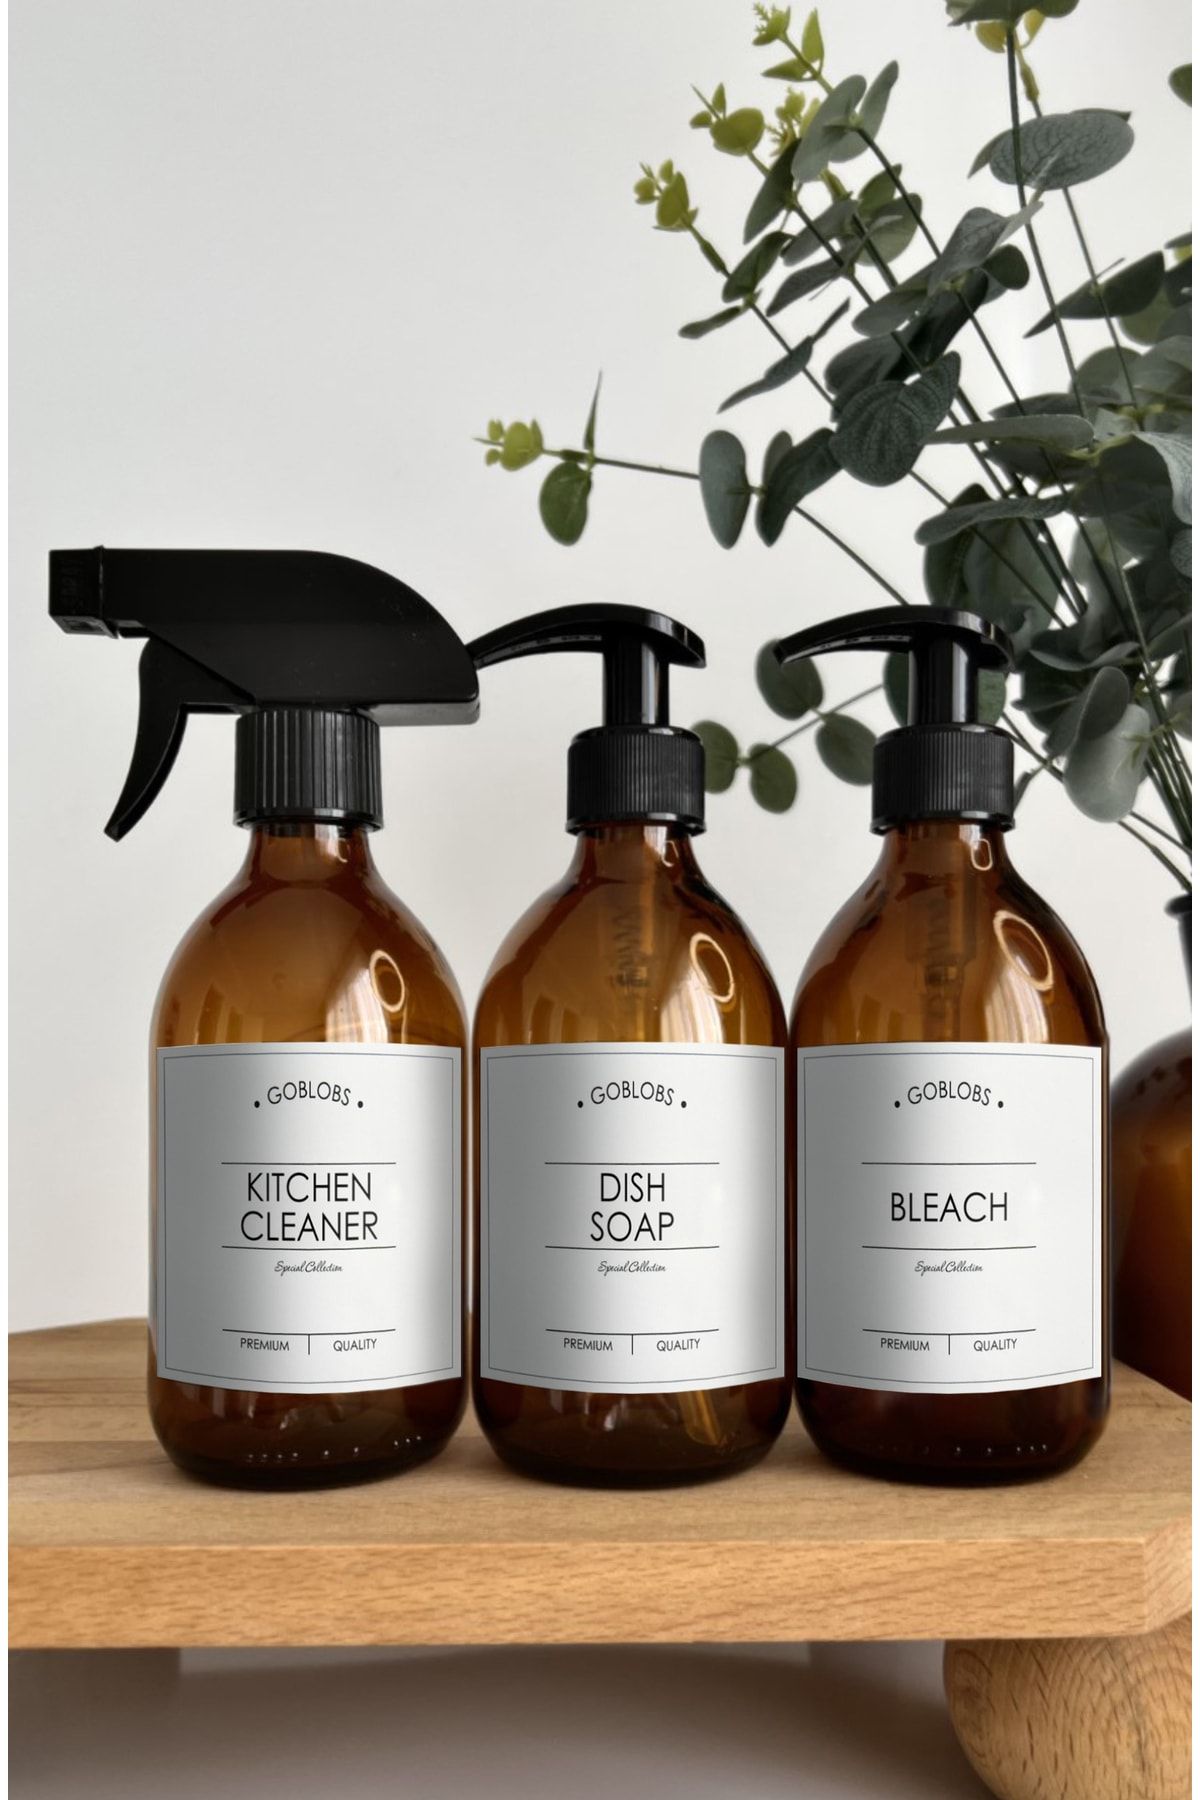 GO BLOBS 3'lü Set 300ml Amber Şişe Sprey Kitchen Cleaner & Dısh Soap & Bleach Beyaz